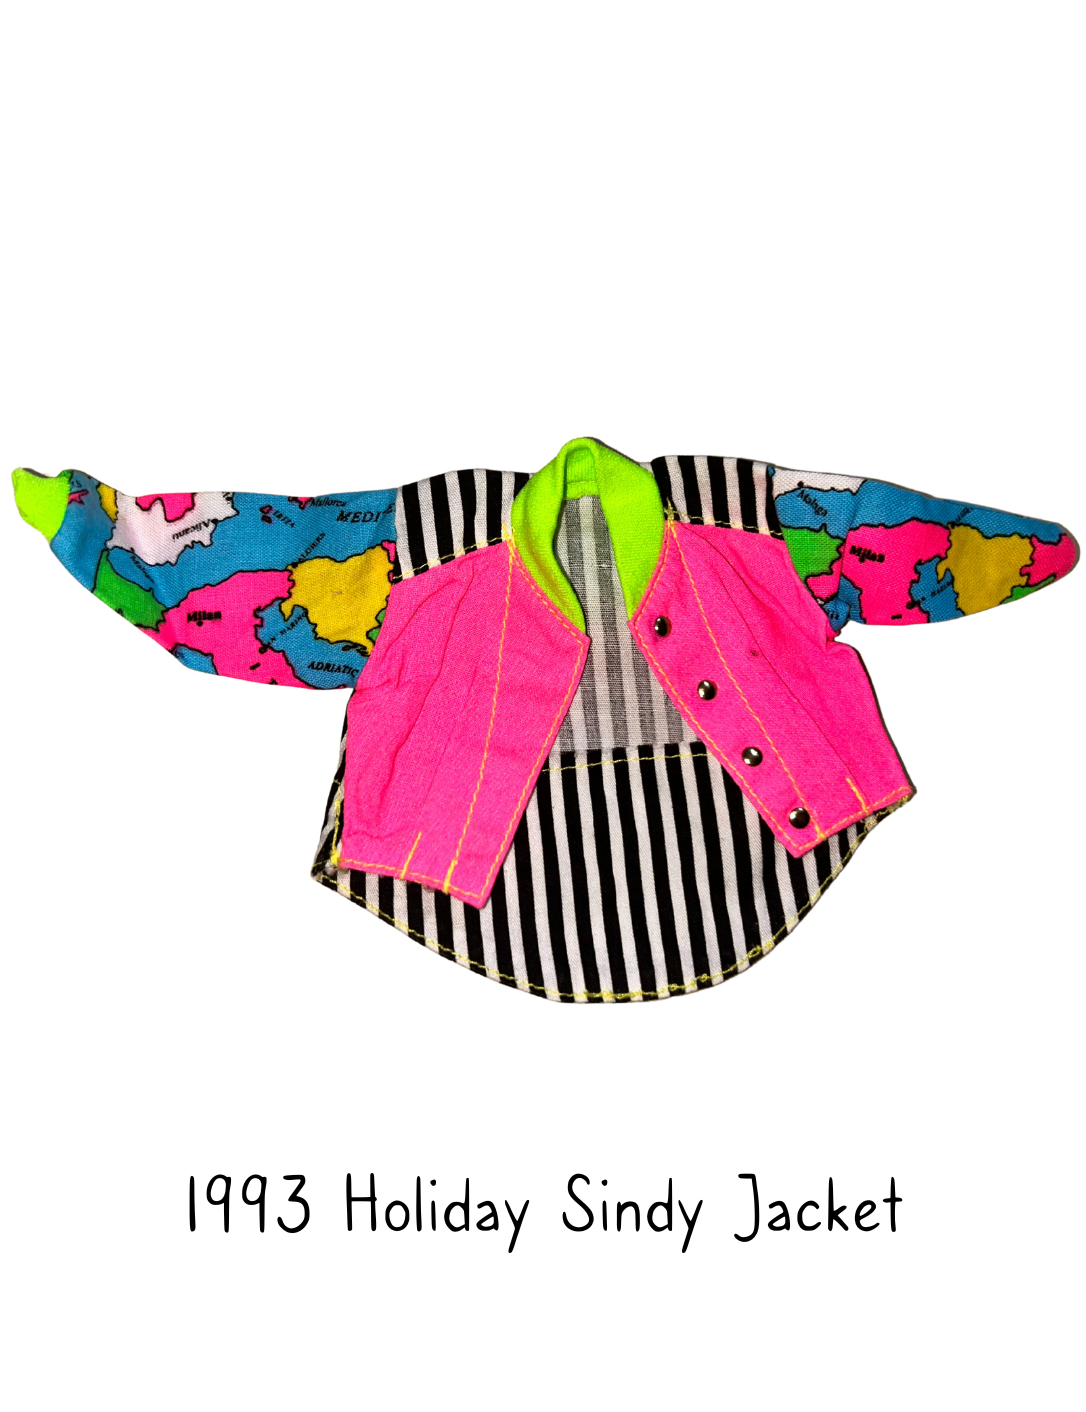 1993 Hasbro Holiday Sindy Jacket